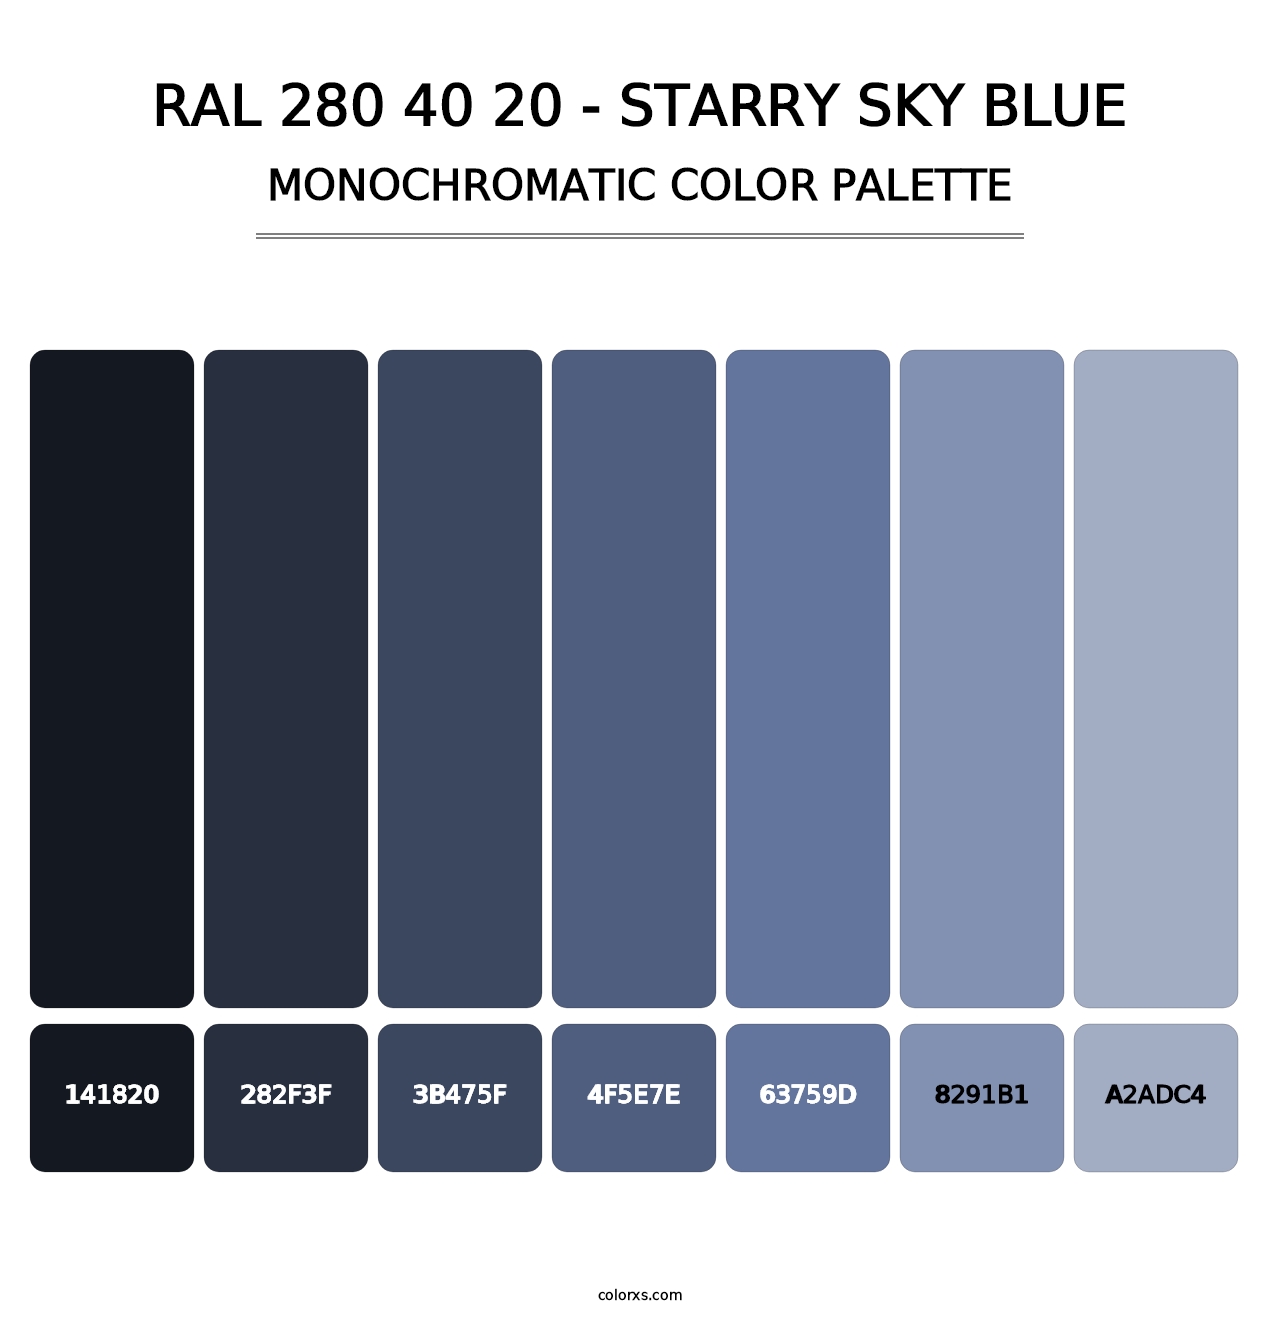 RAL 280 40 20 - Starry Sky Blue - Monochromatic Color Palette